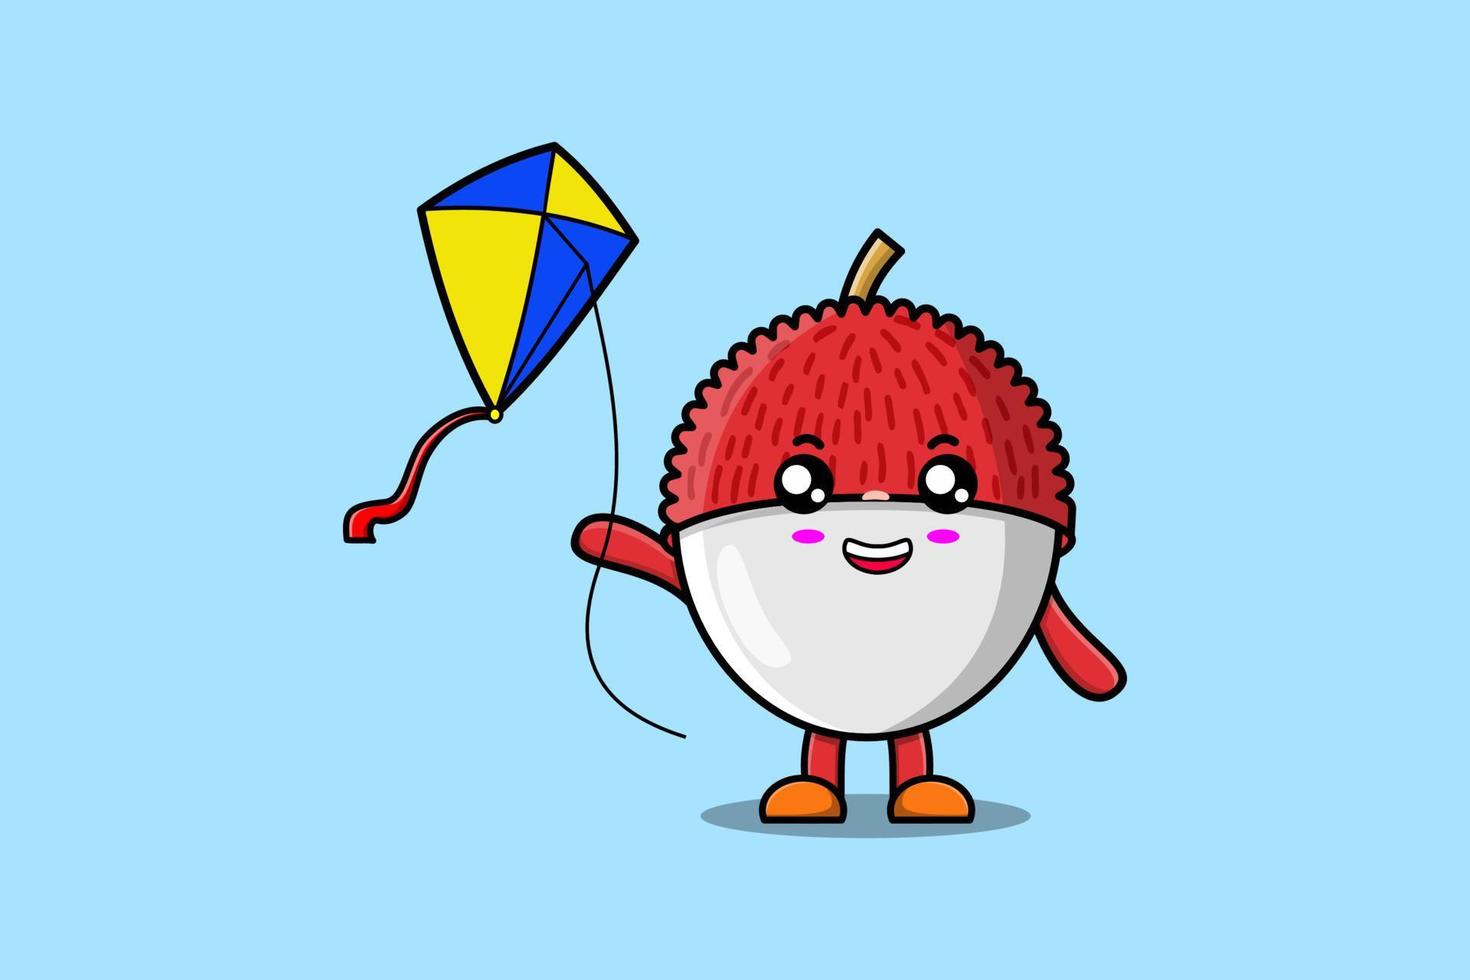 personaje de lichi de dibujos animados lindo jugando cometa volando vector